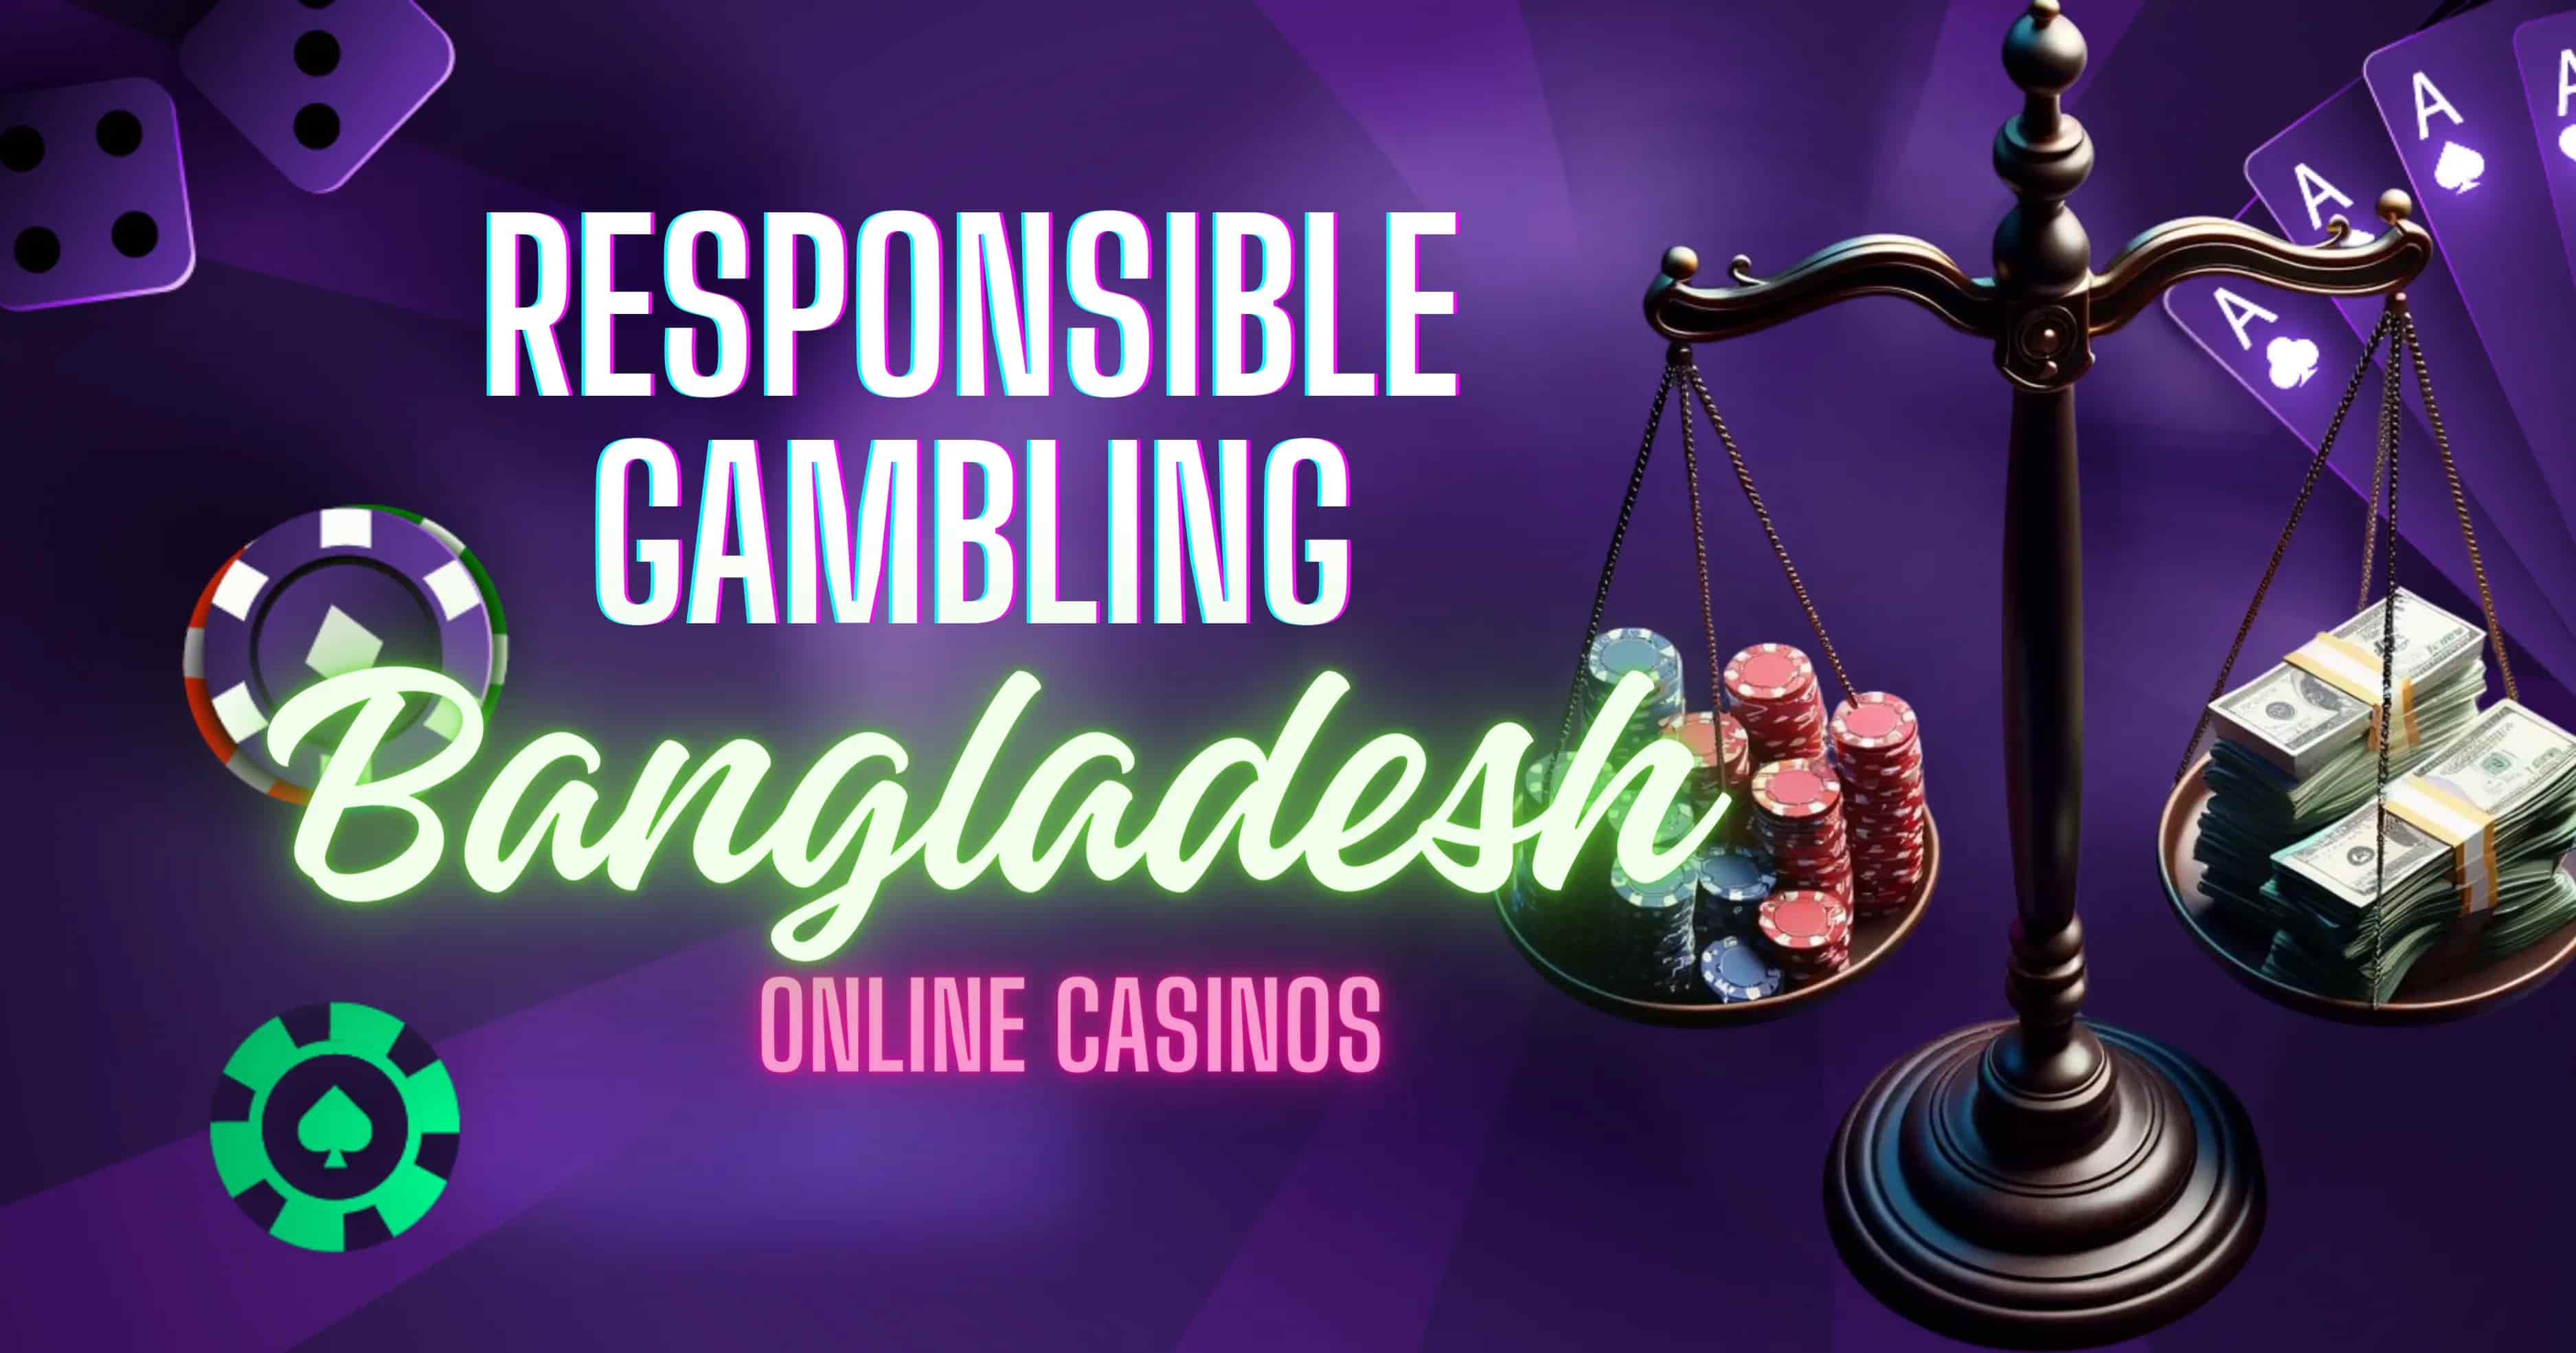 Responsible Gambling in Bangladesh